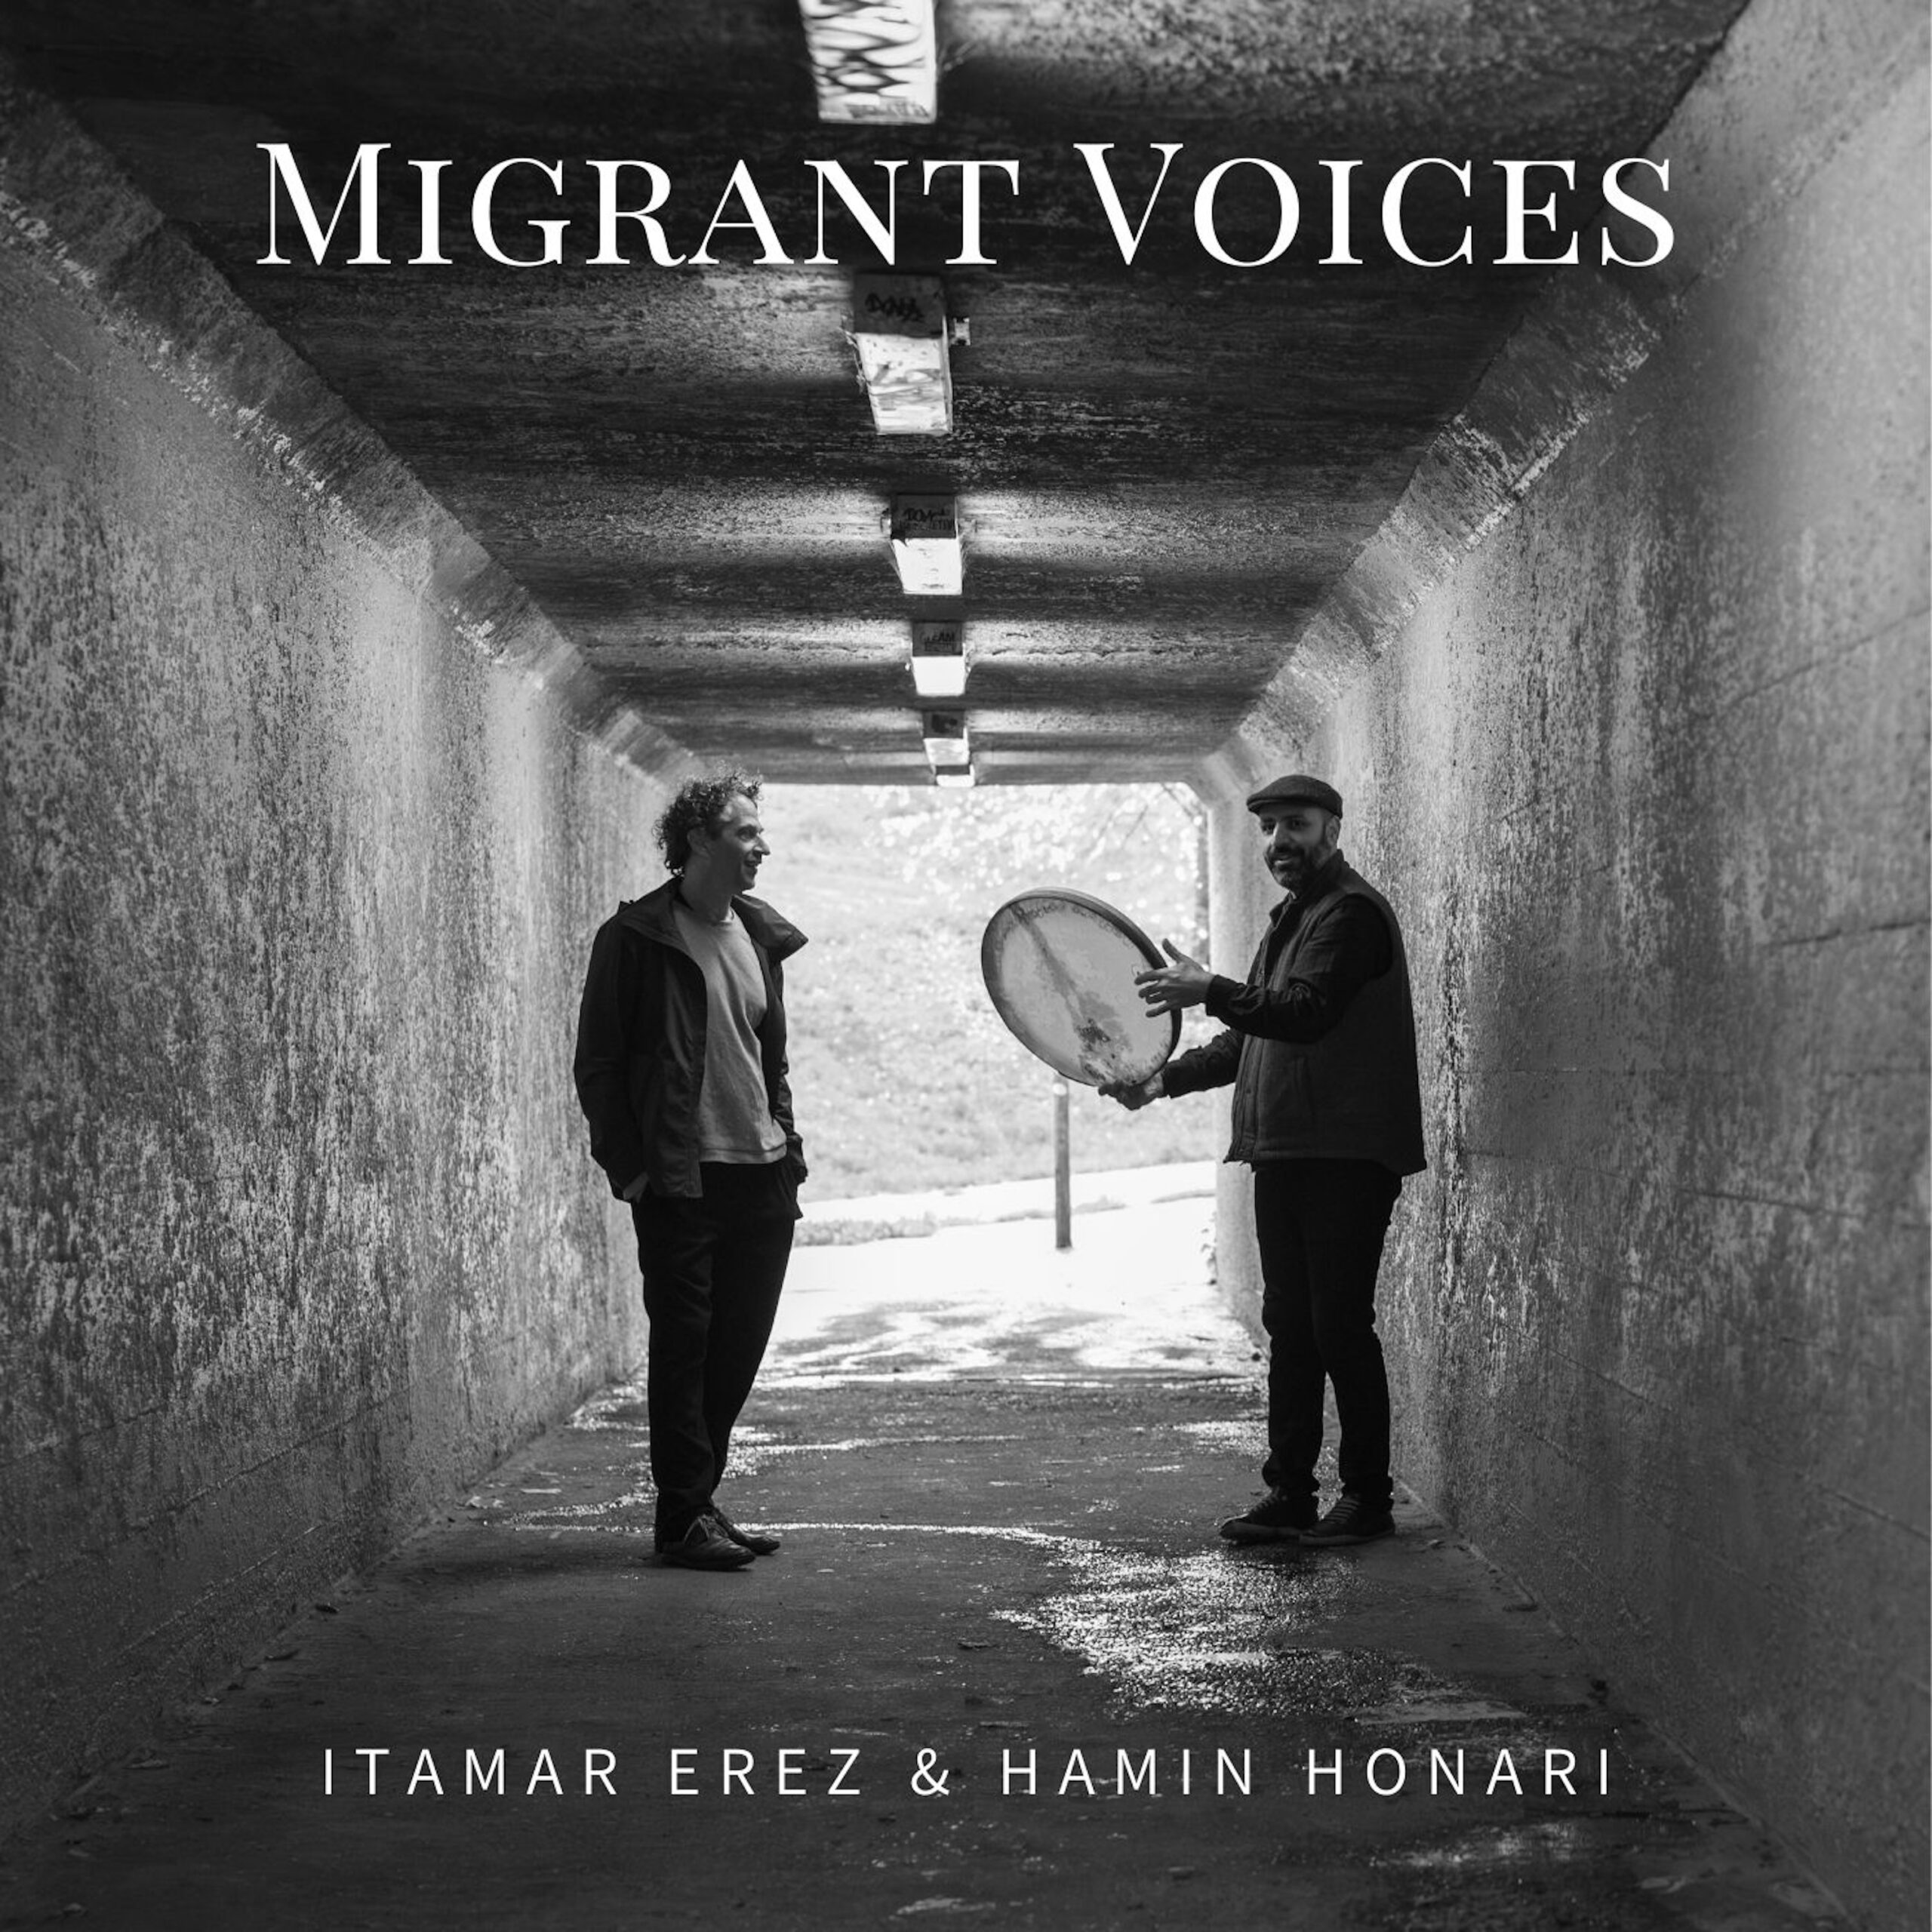 Israeli and Iranian Musicians Unite in Harmony: Itamar Erez & Hamin Honari’s “Migrant Voices”